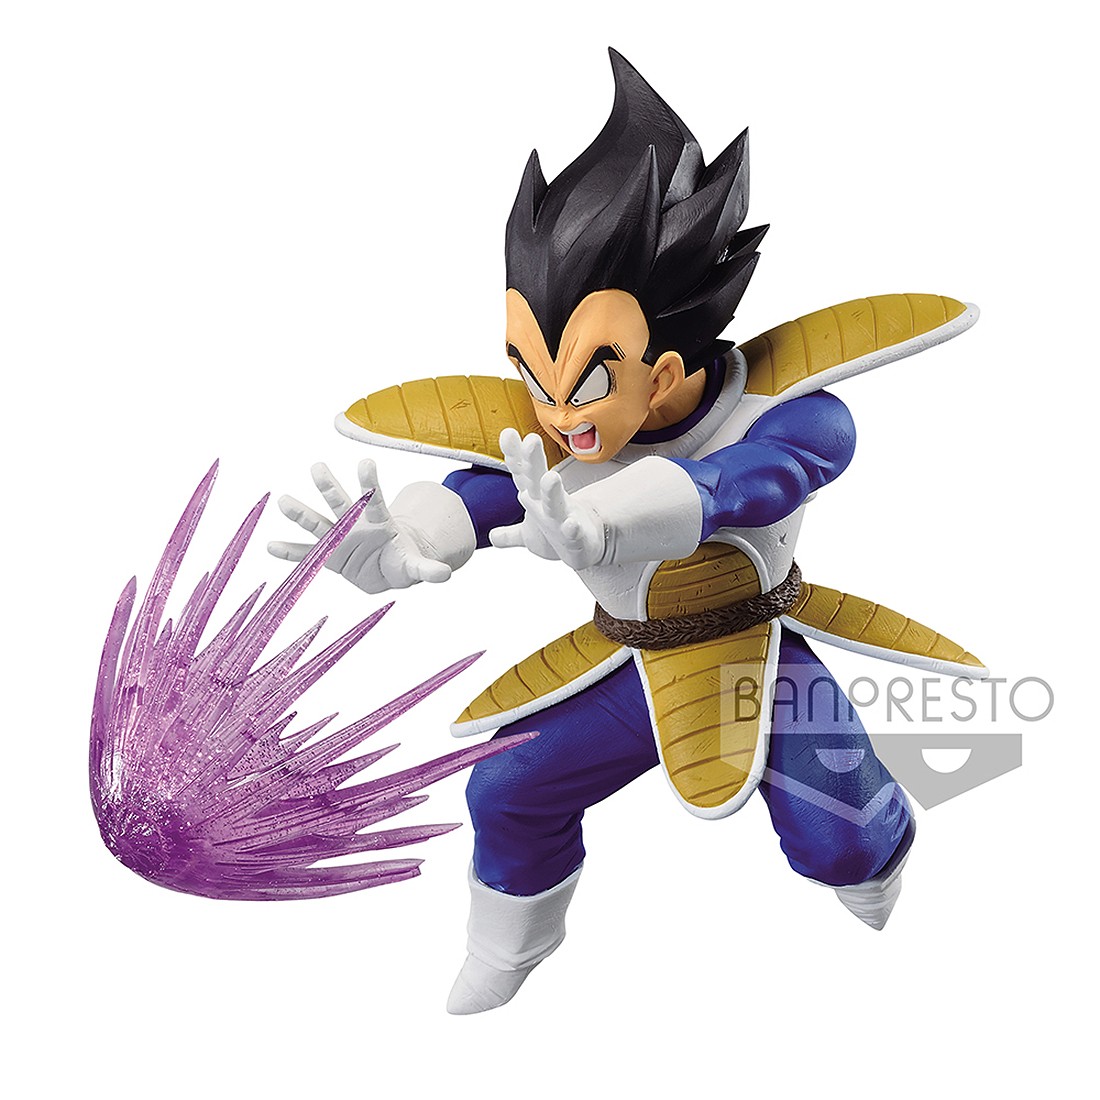 PREORDER - Banpresto Dragon Ball Z G x Materia The Vegeta Figure (blue)